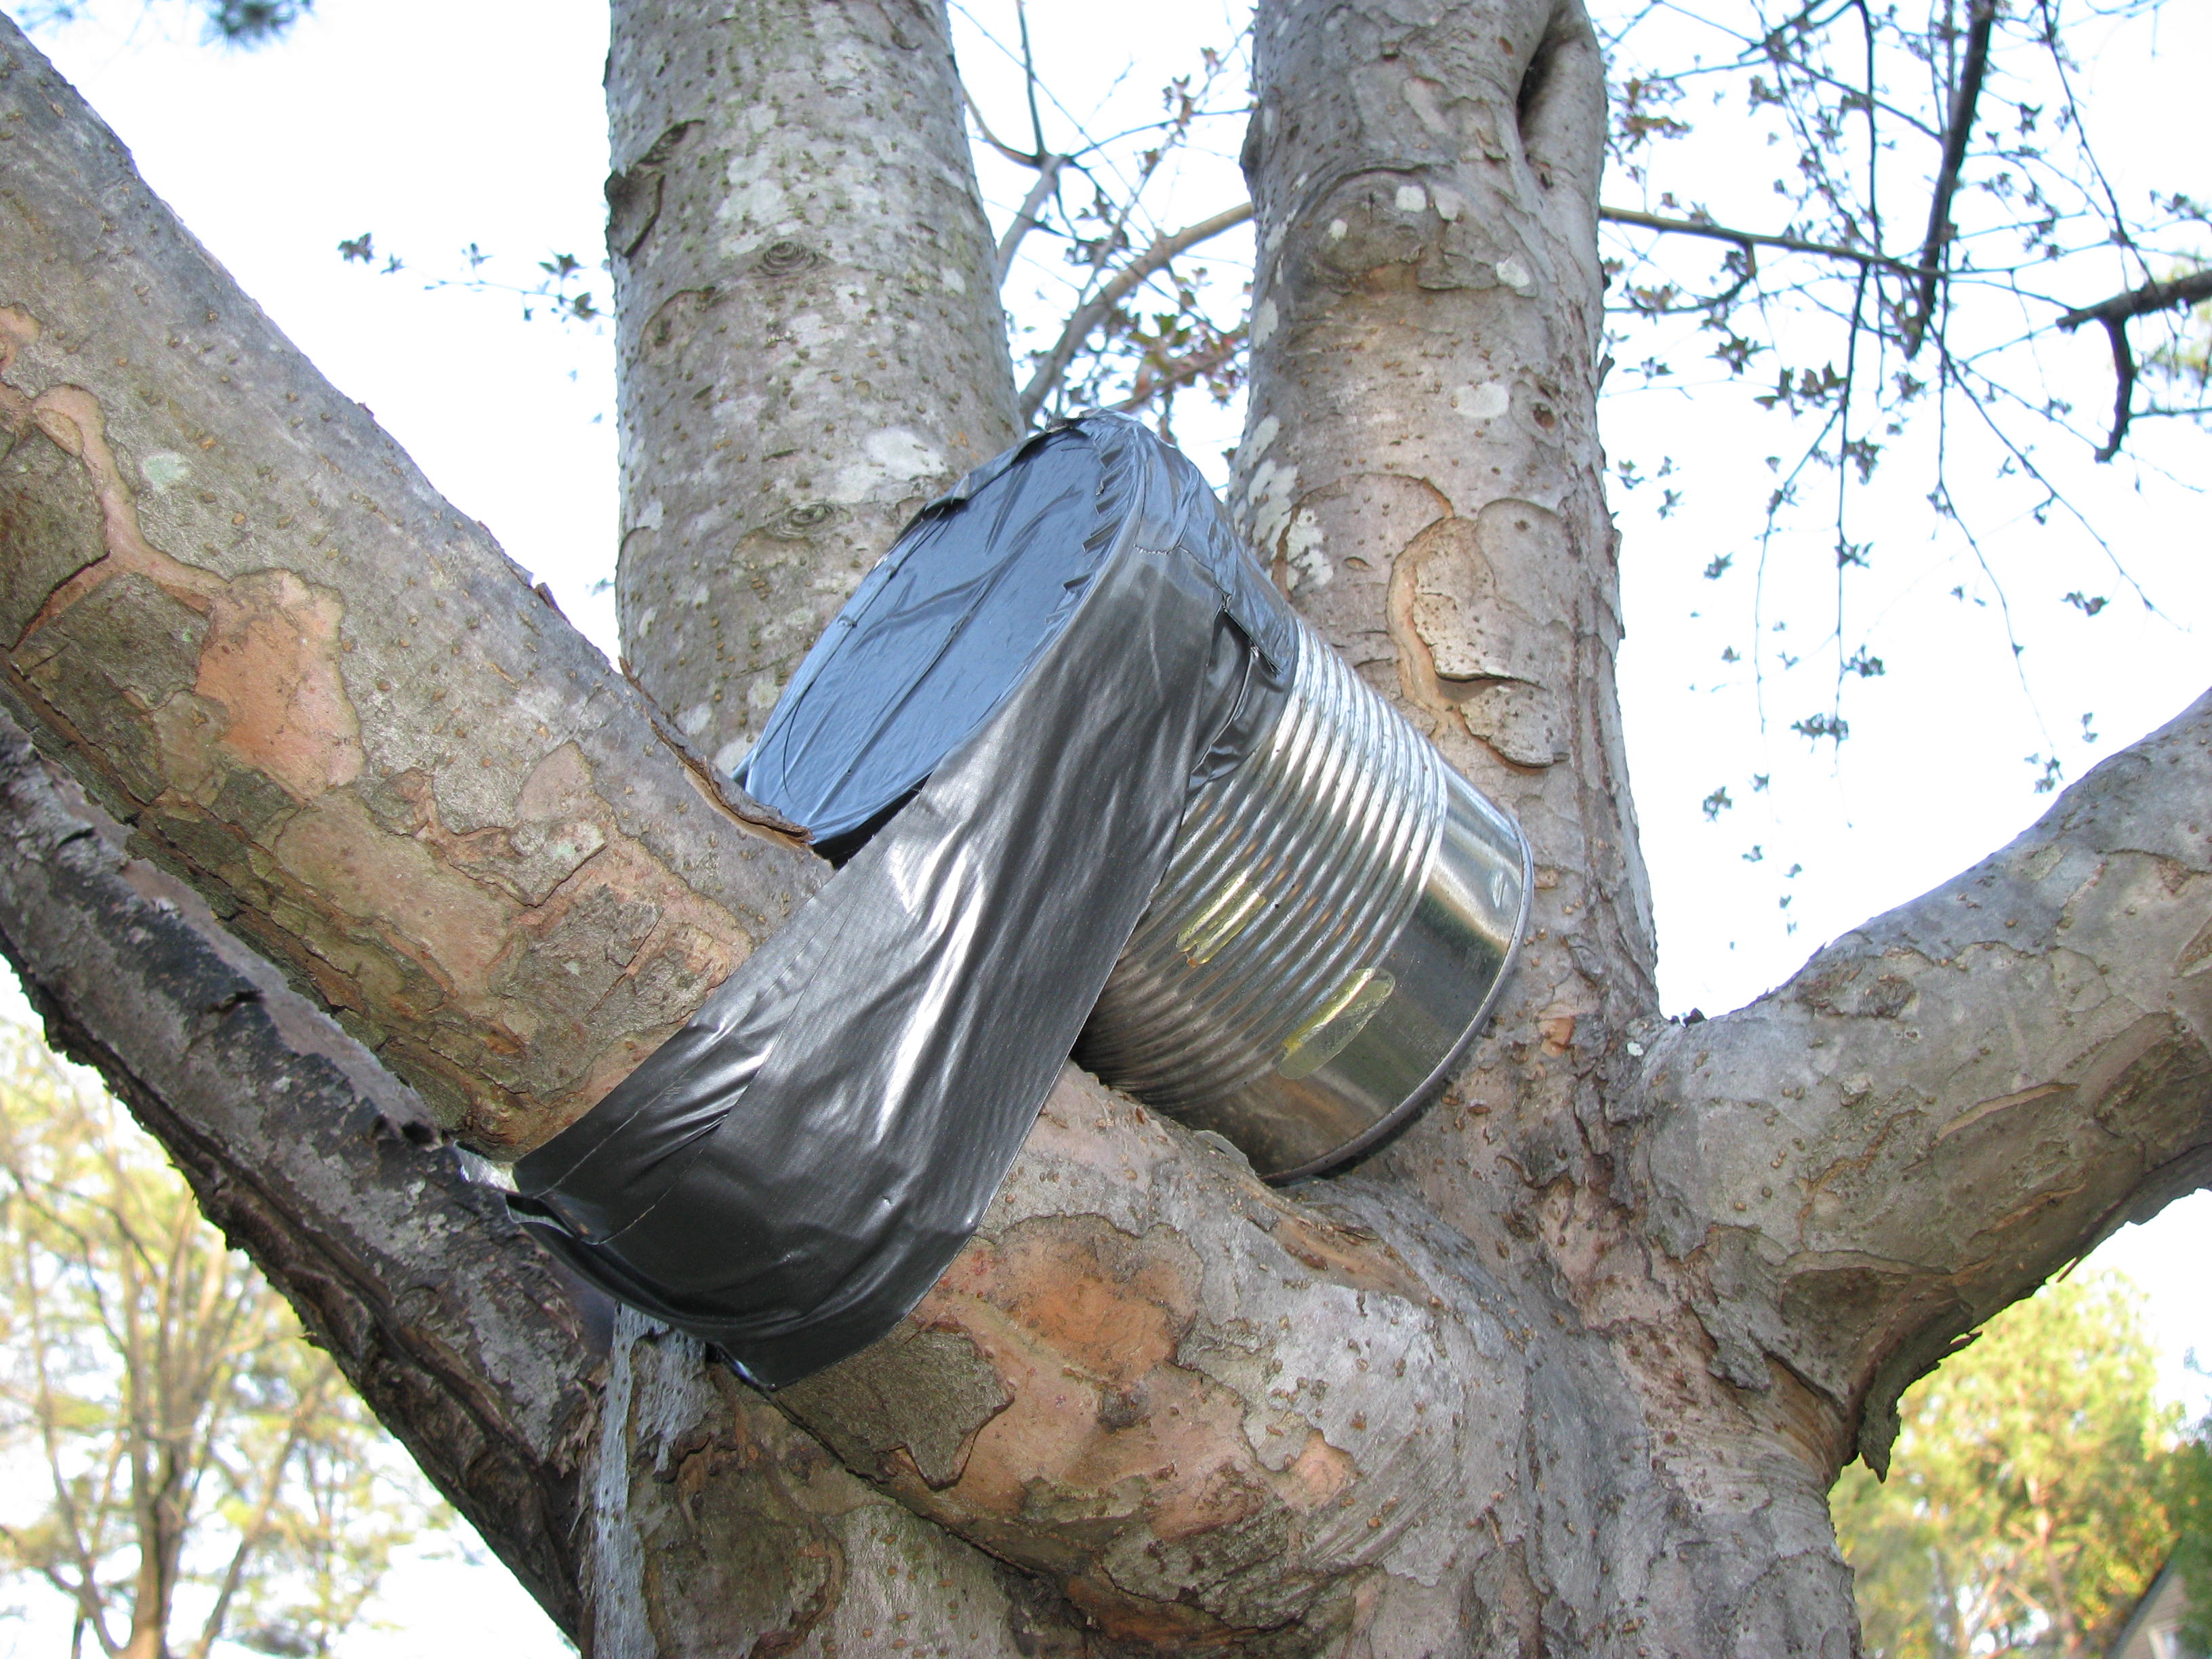 solarcam mounted on tree